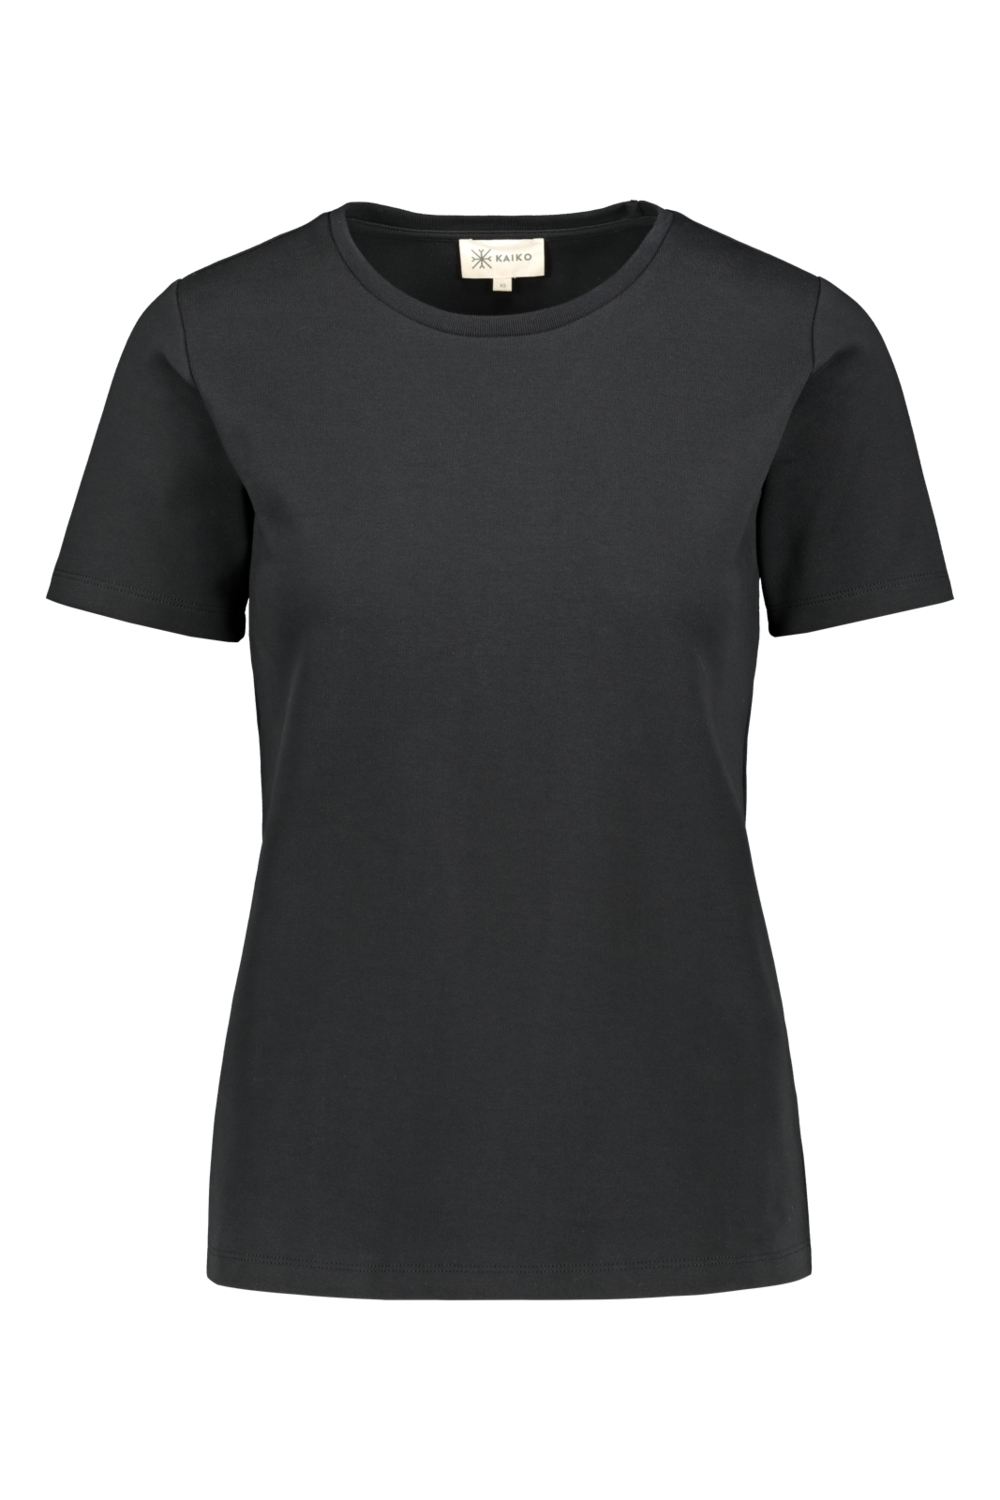 Kaiko The T-shirt, Black